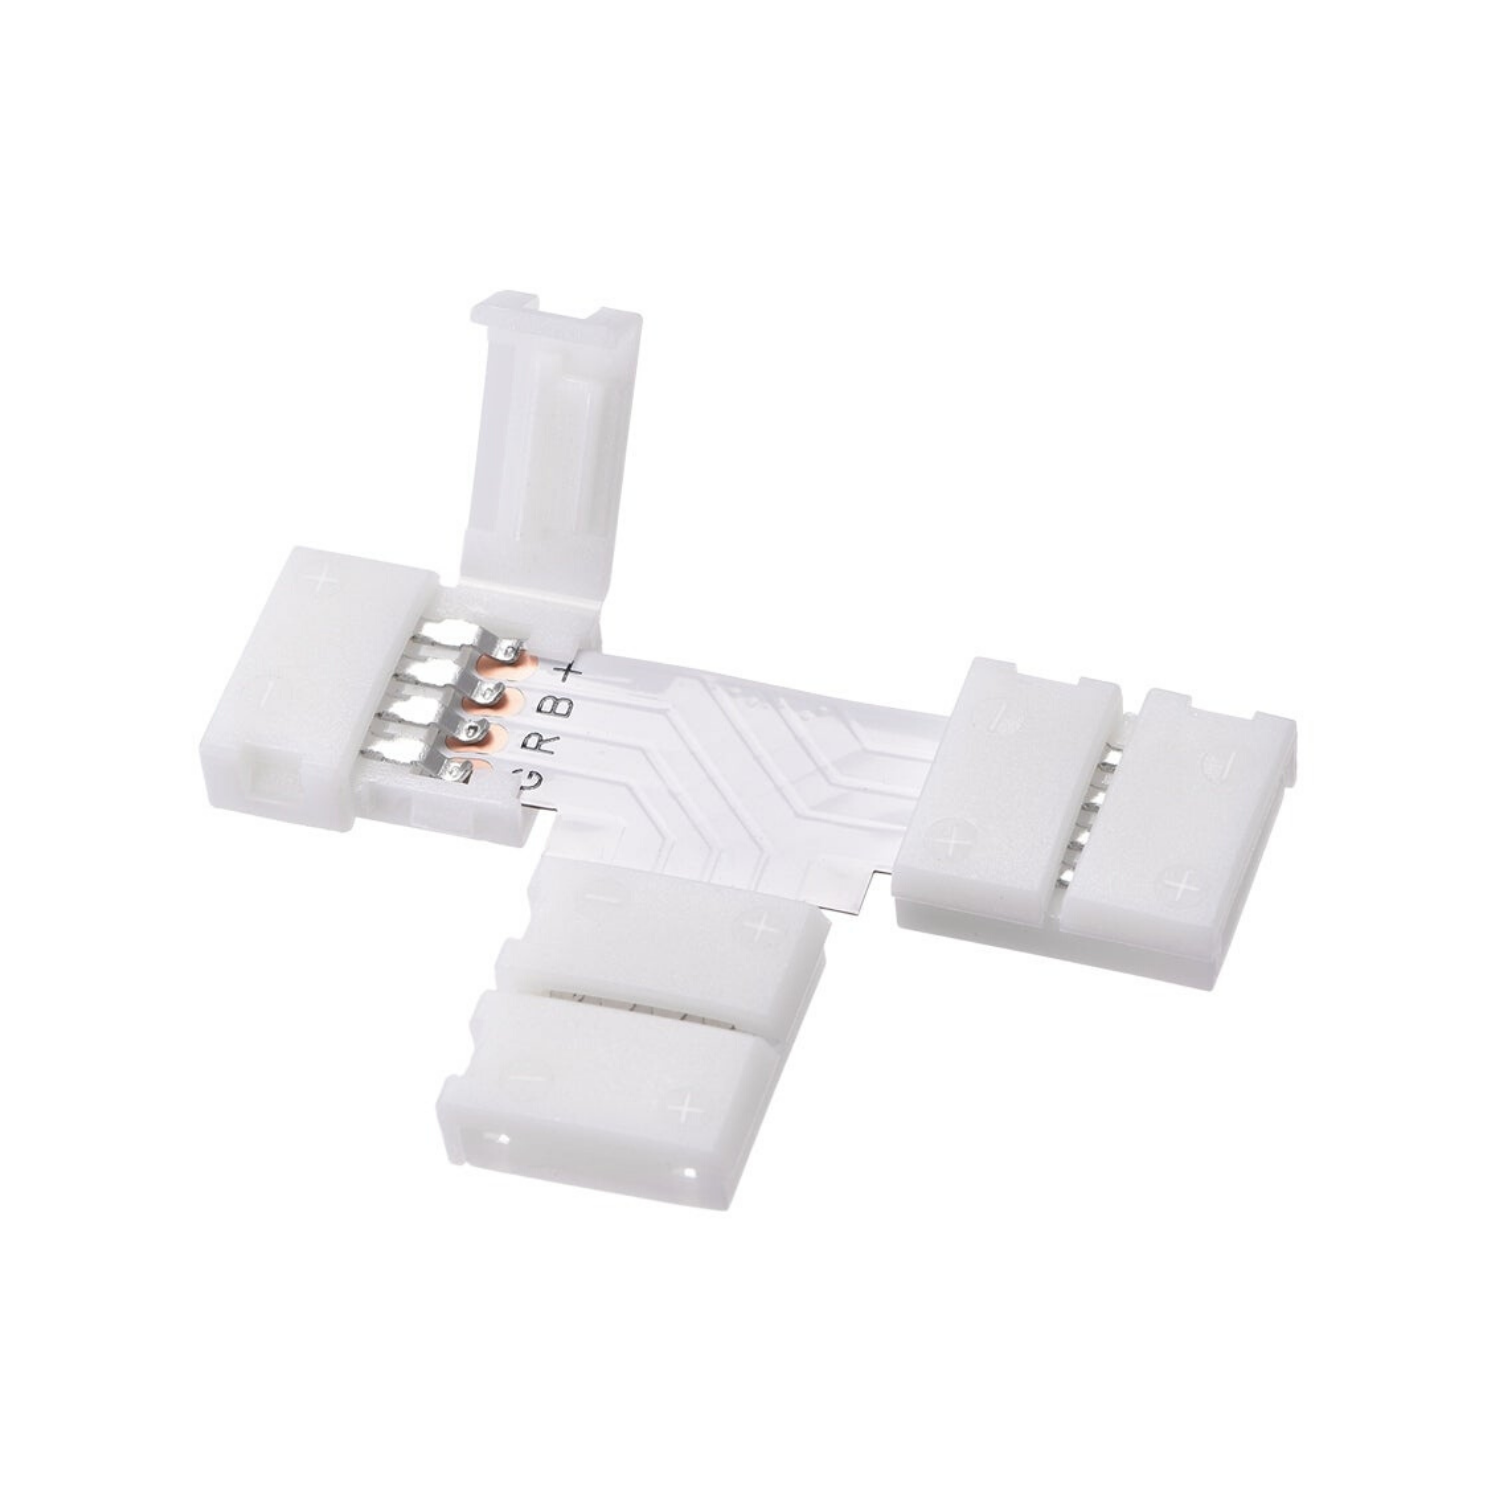 4x Connecteur Angle T pour ruban led - RGB 5050 strip 4 broches